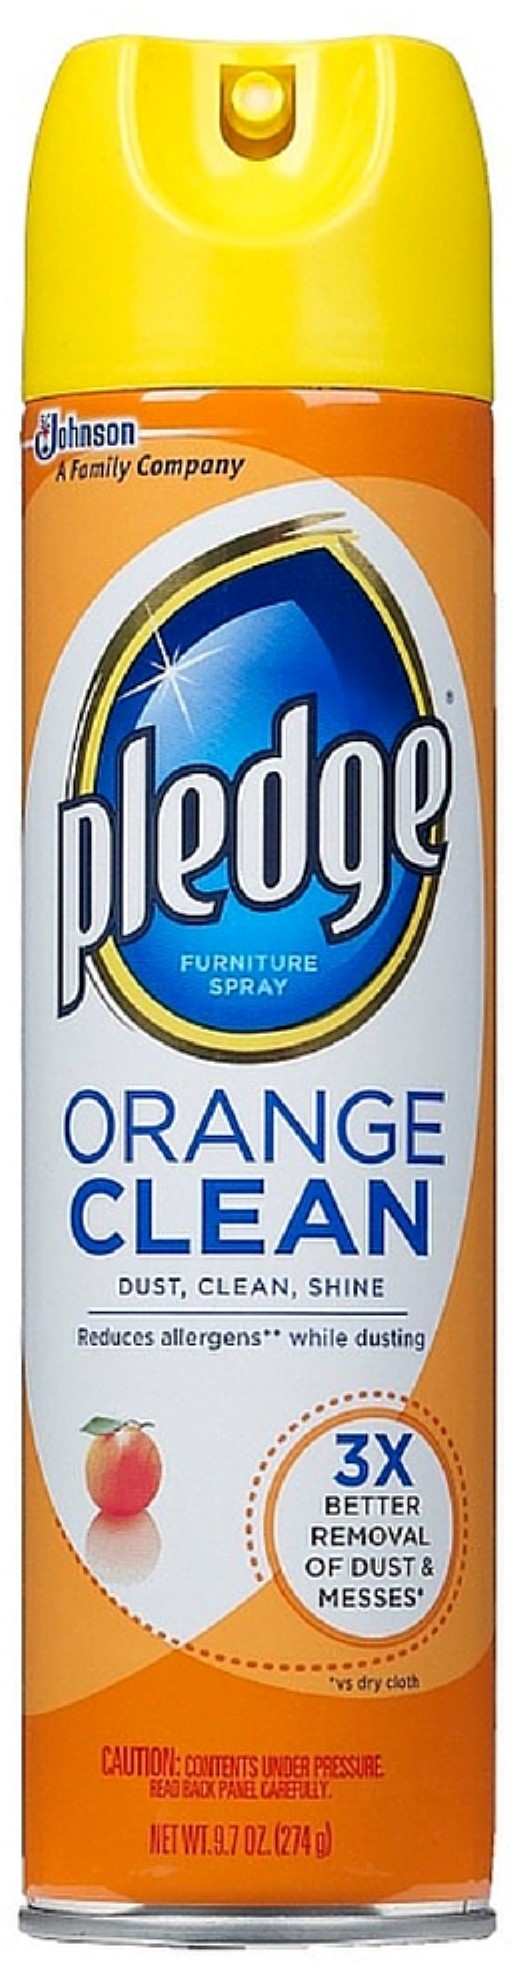 Pledge Orange Clean Furniture Spray 9.70 oz (Pack of 2) - image 1 of 1